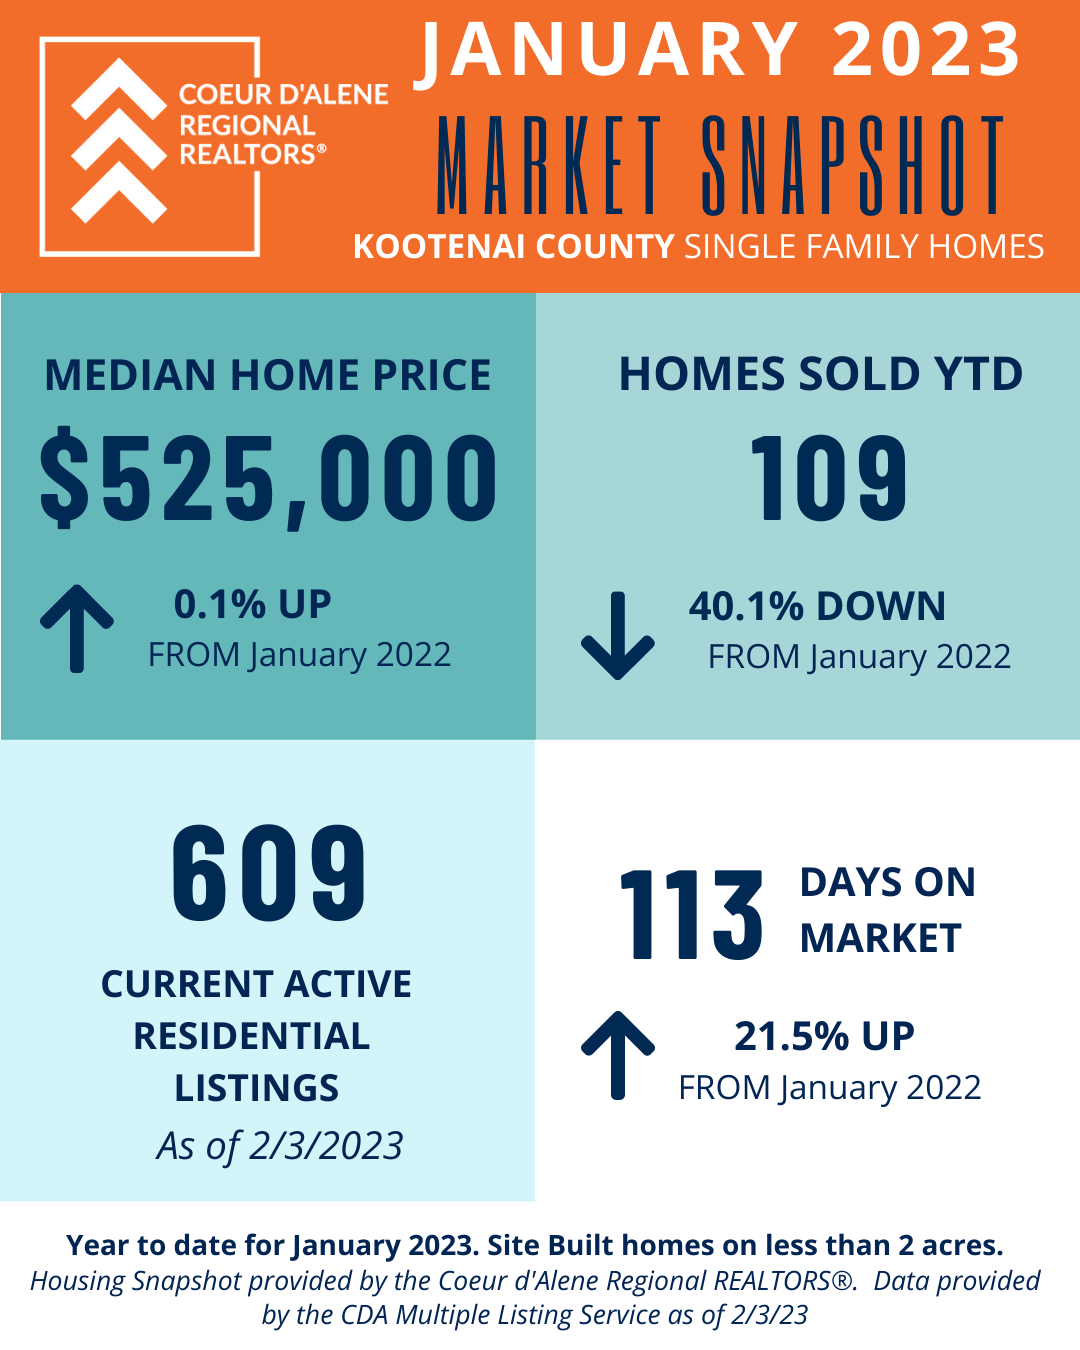 January 2023 Real Estate Snapshot for Kootenai County